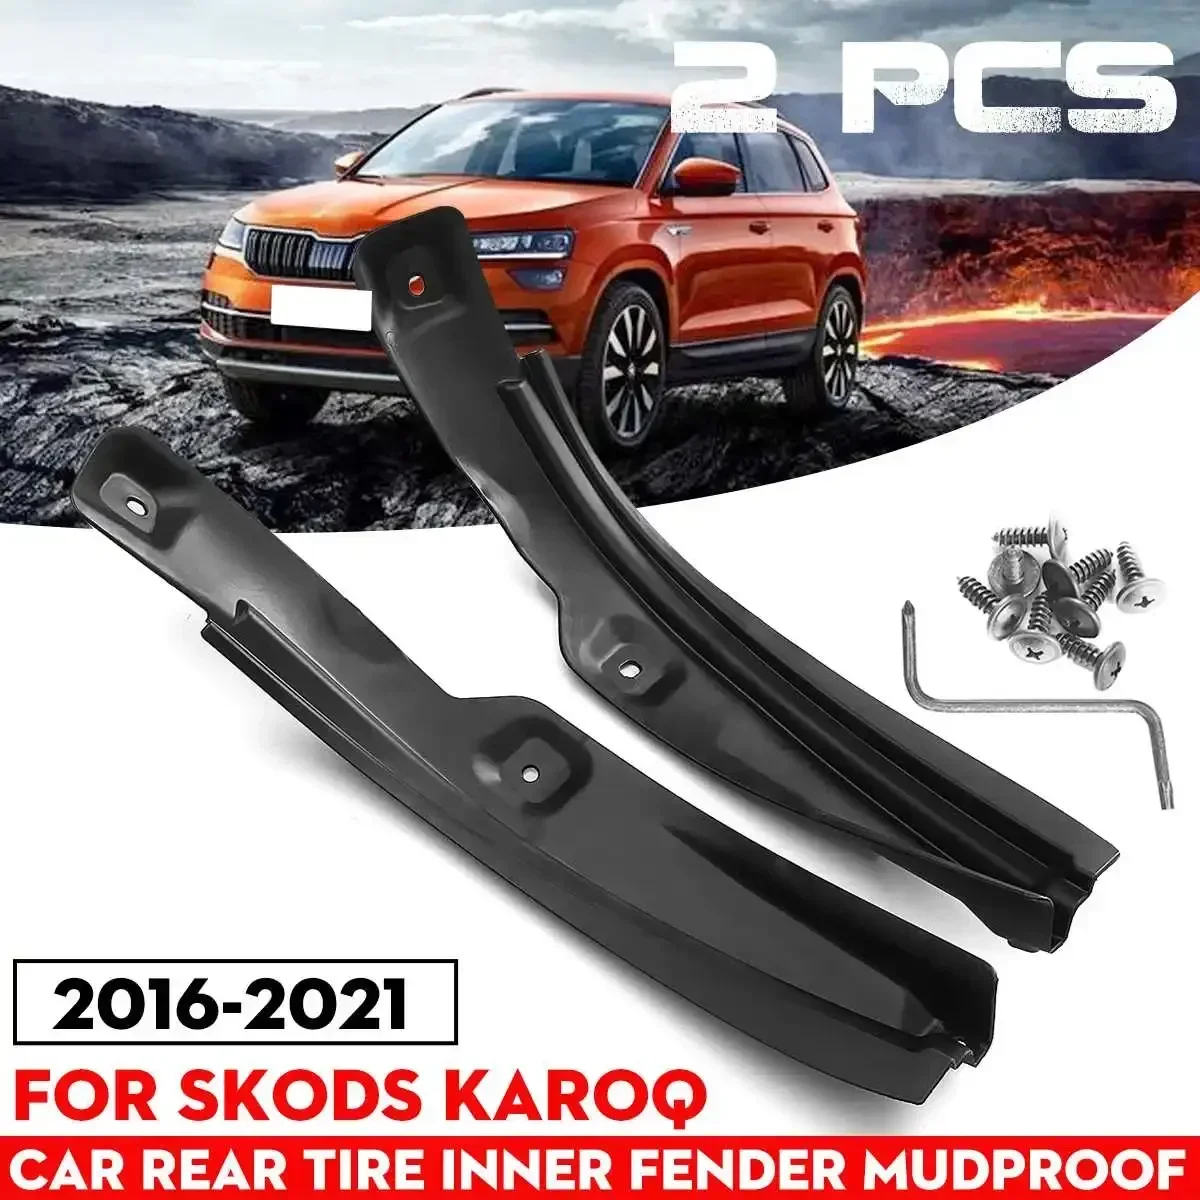 

2Pcs Car Rear Tire Inner Fender Mudproof For Skoda Karoq 2016-2021 Mudguard Anti Dirt Cover Front Mat Modification Body Kit